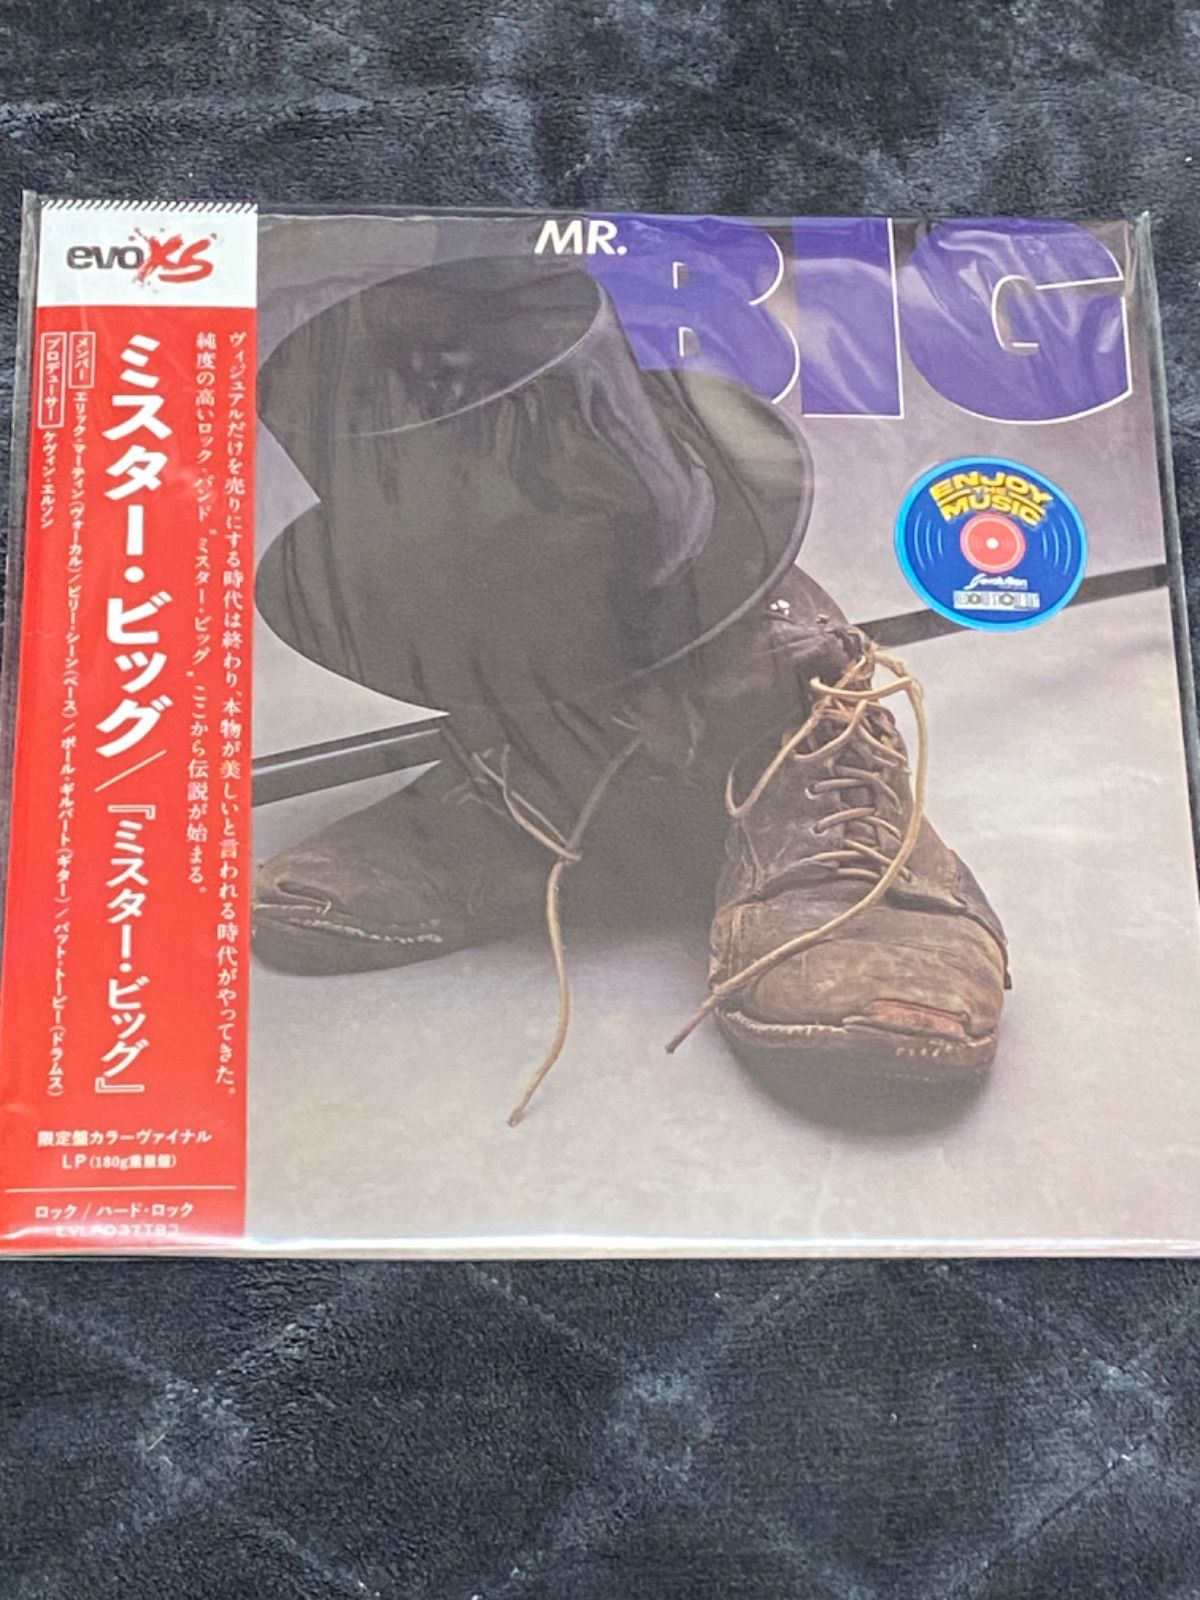 MR.BIG ミスター・ビッグ 1st RSD限定レコード - 洋楽